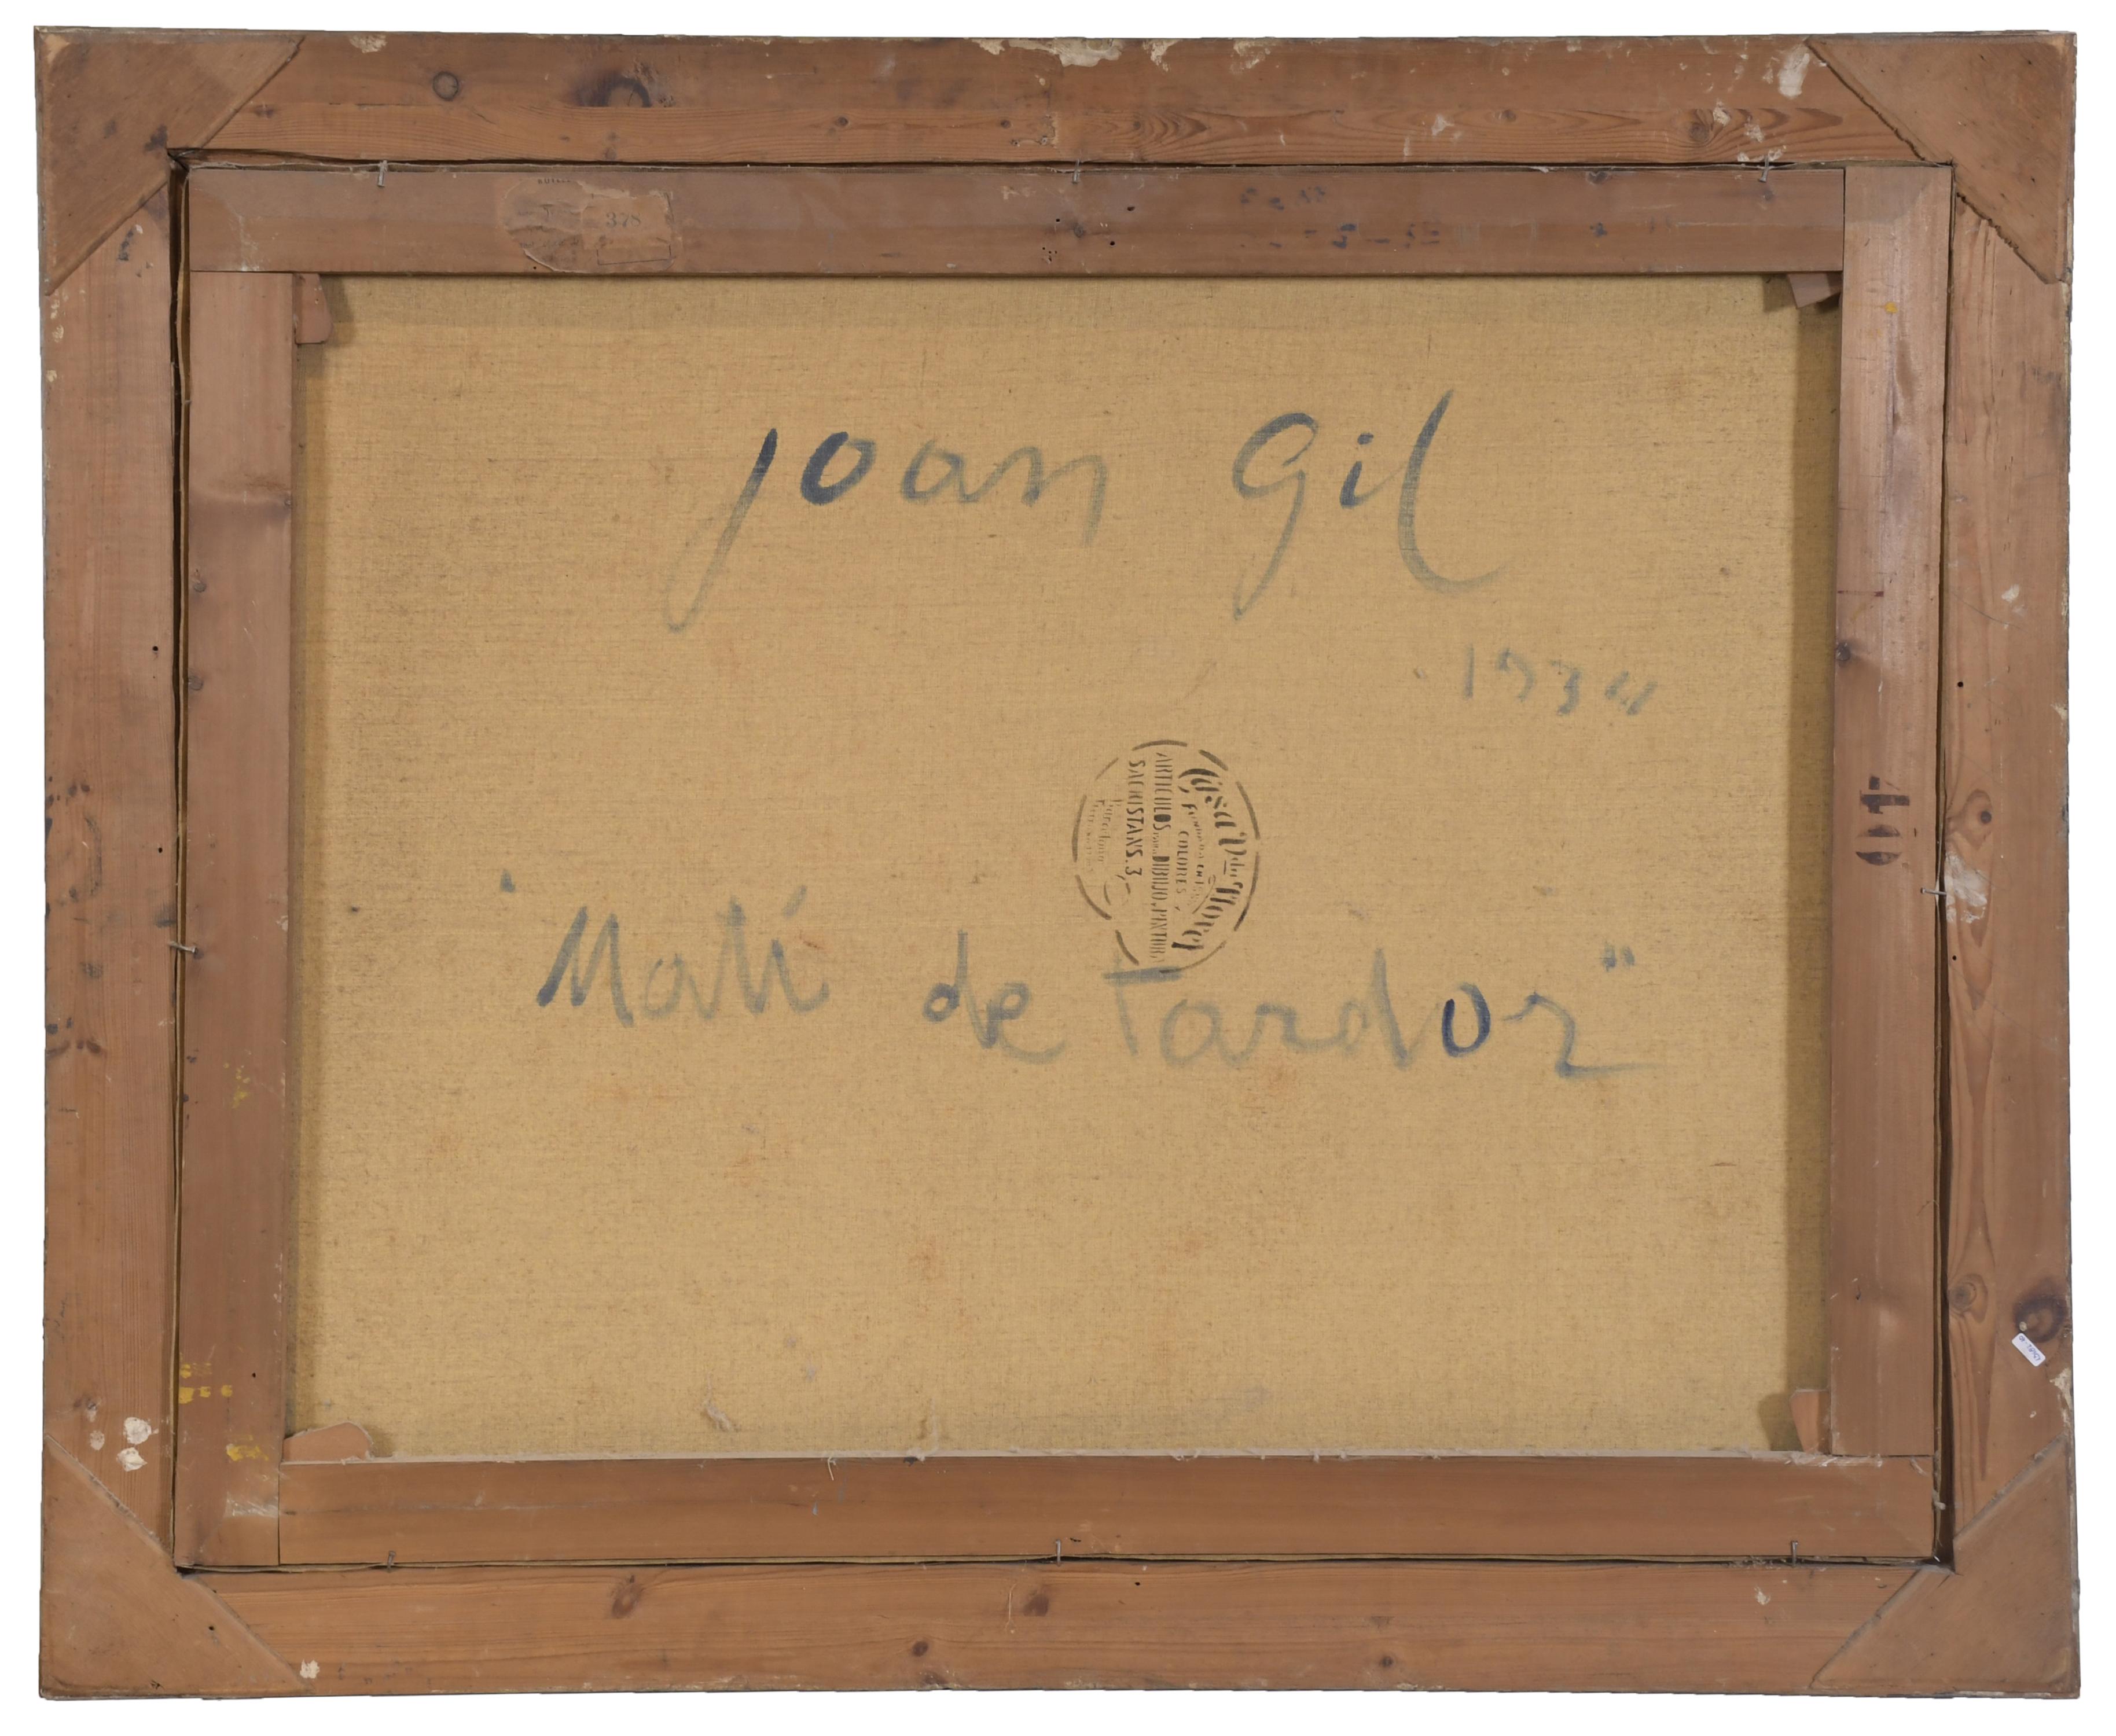 JOAN GIL I GIL (1900-1984). "MOLI DE TARDOR", 1934.